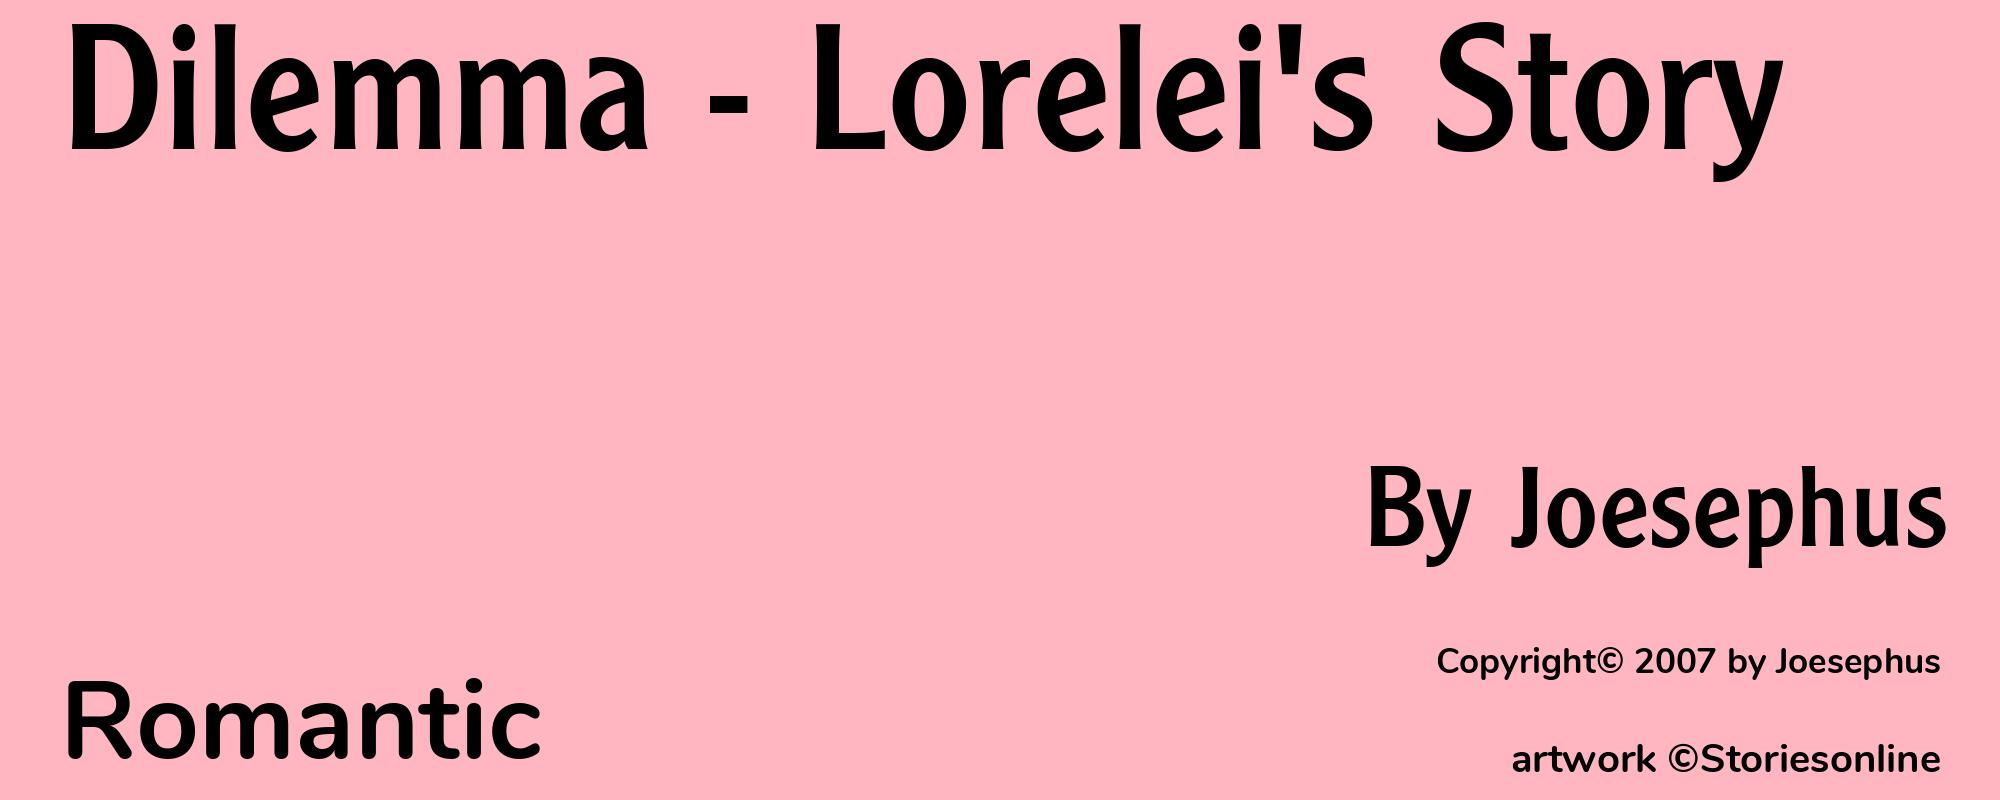 Dilemma - Lorelei's Story - Cover